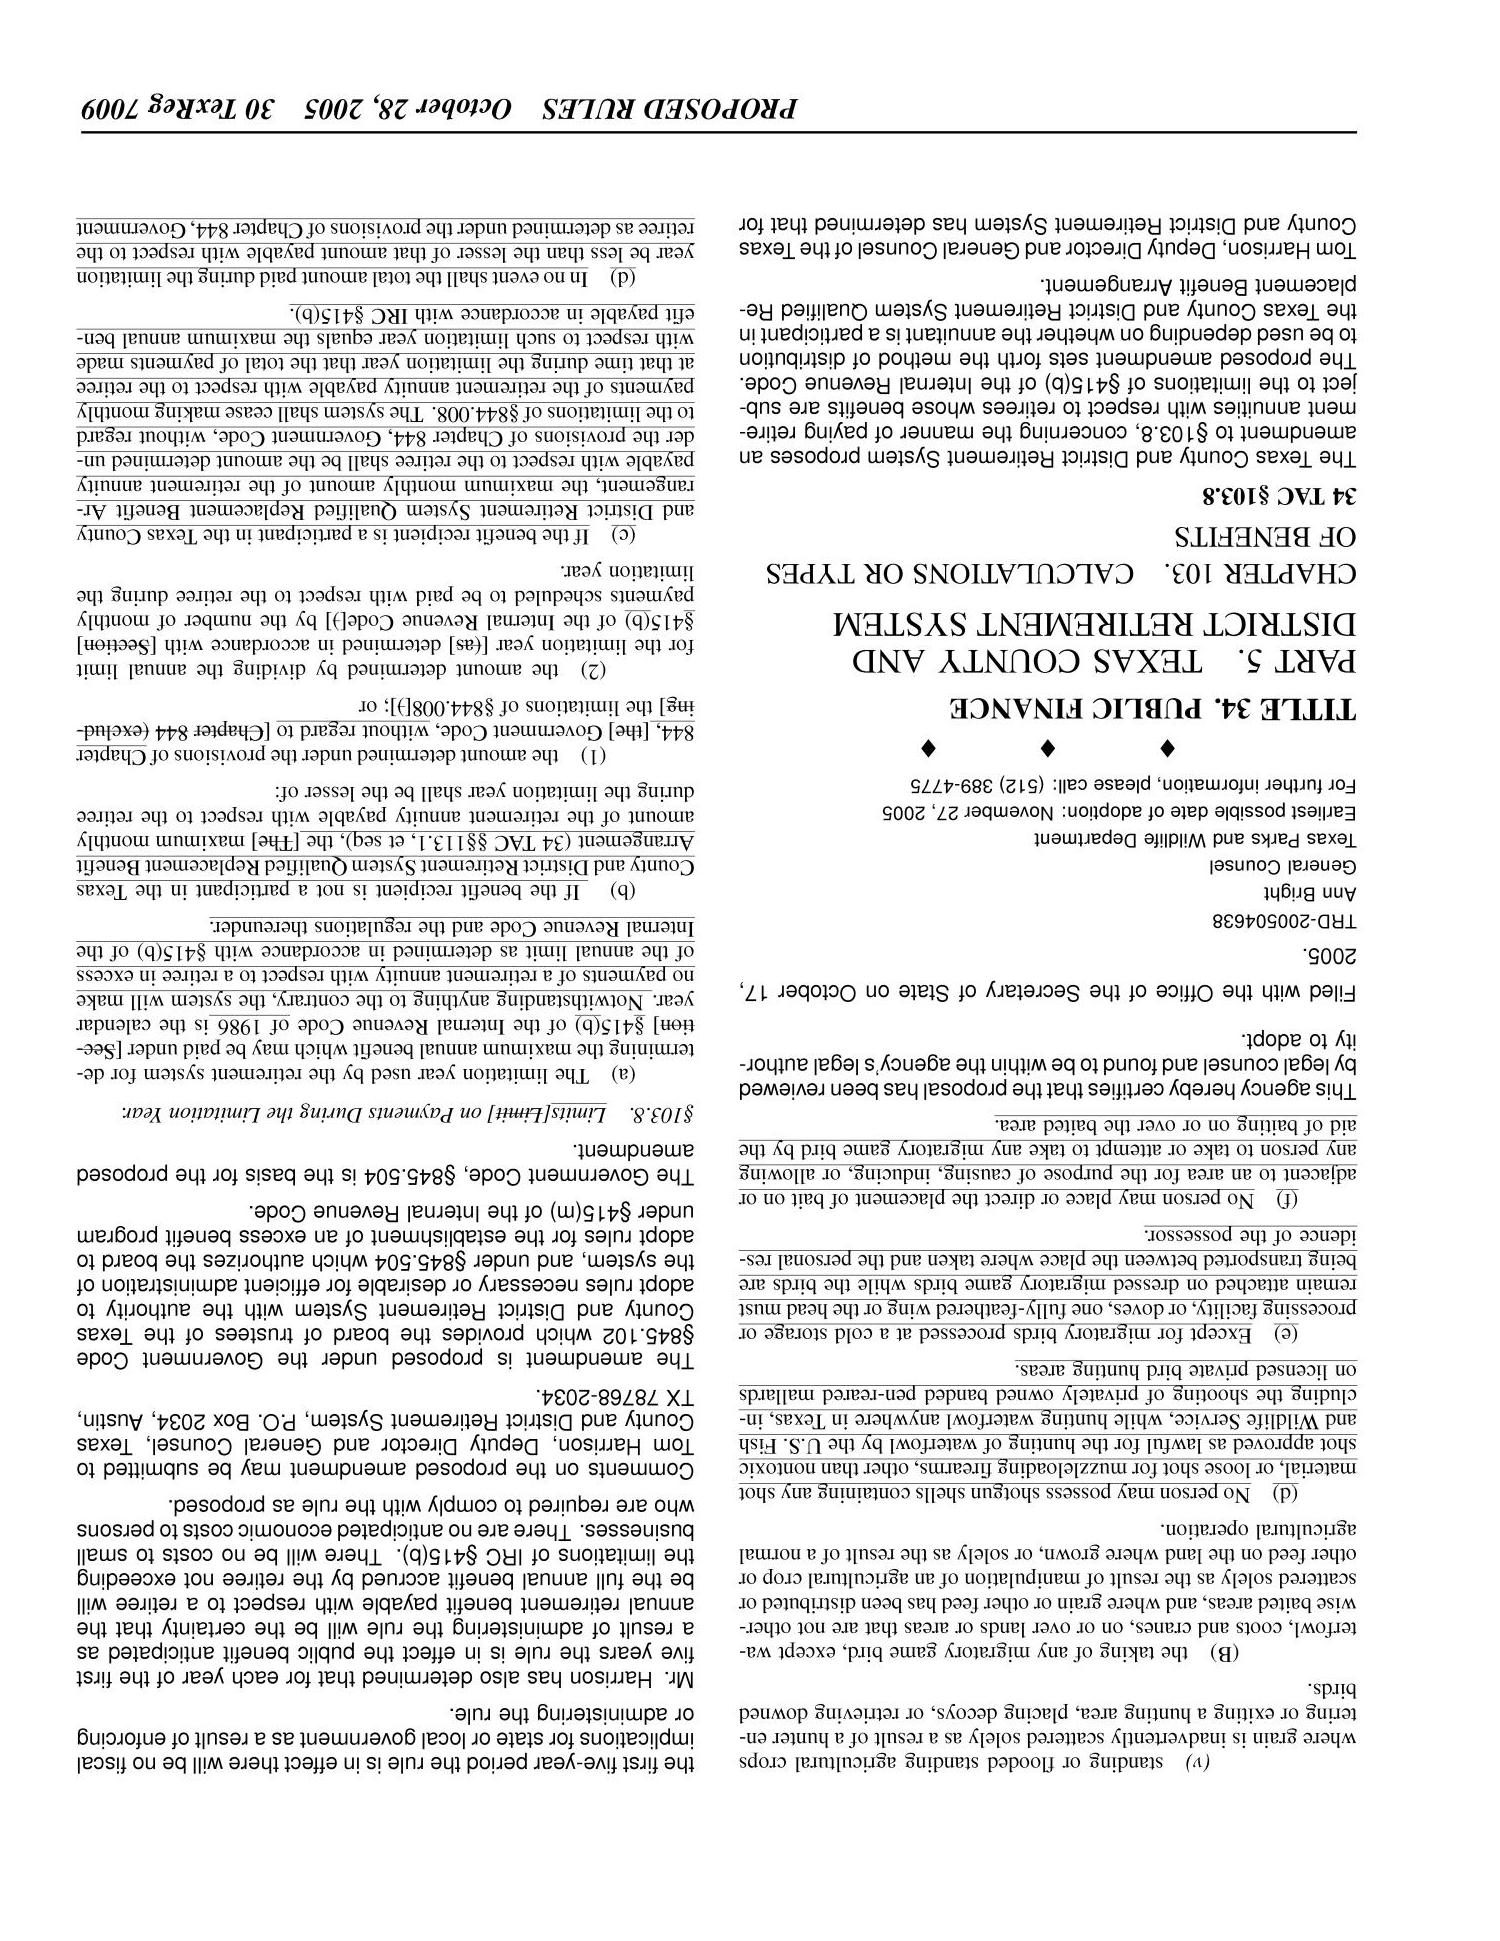 Texas Register, Volume 30, Number 43, Pages 6973-7094, October 28, 2005
                                                
                                                    7009
                                                